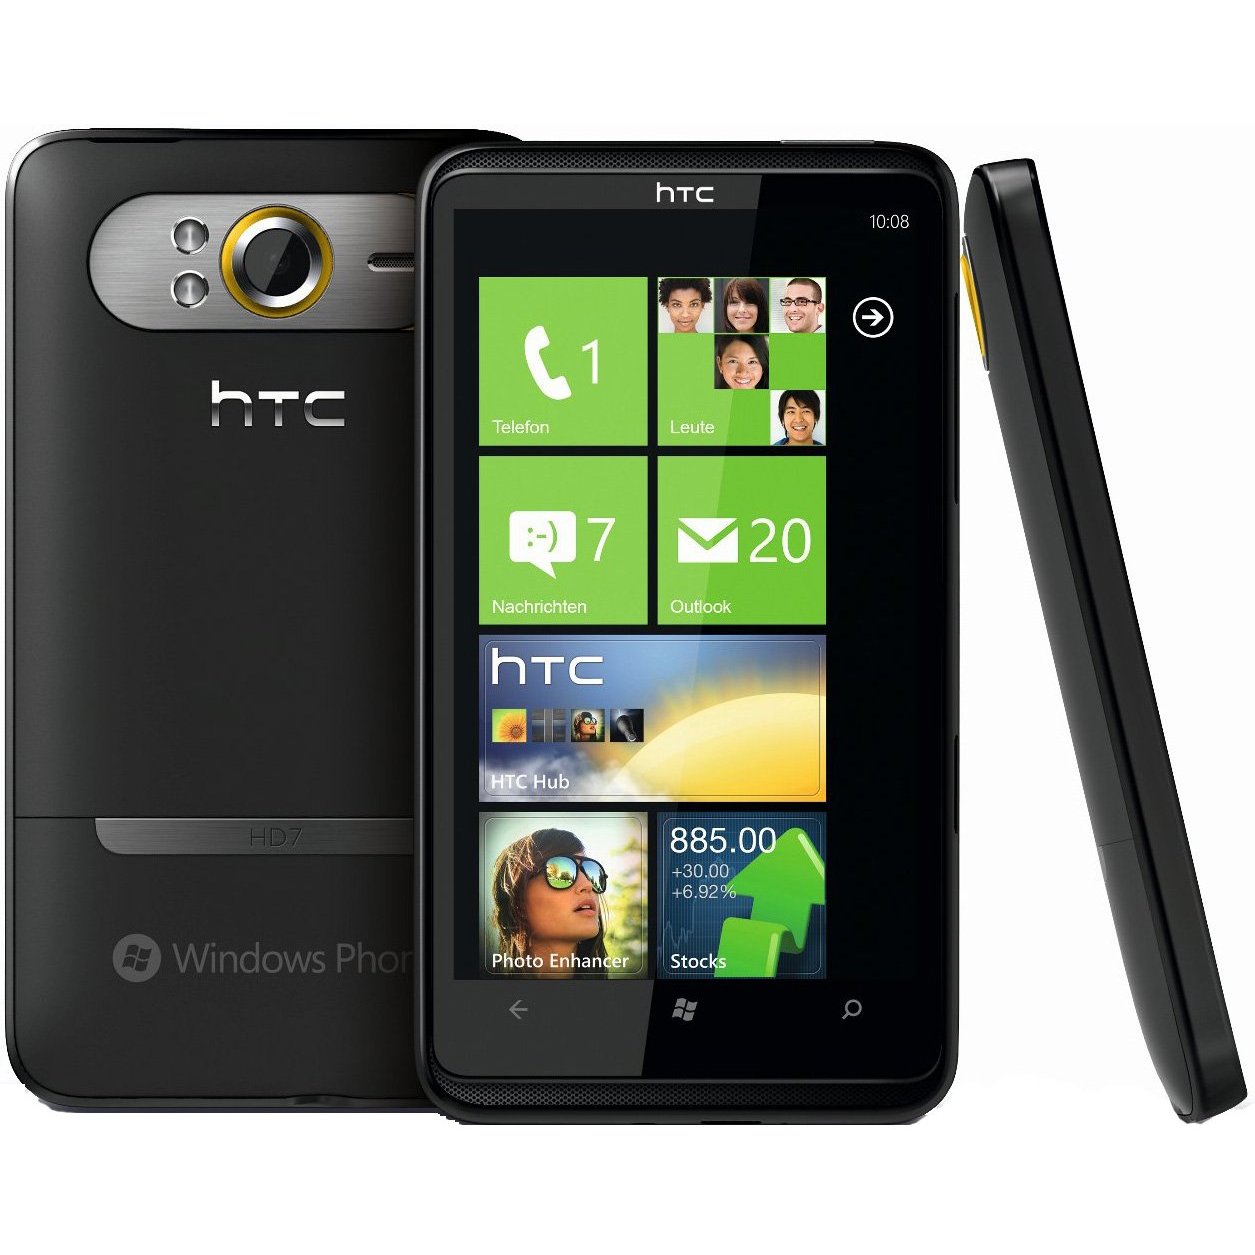 LATEST PRICE INFO: HTC HD7 Windows Mobile Phones Price in India, US, UK